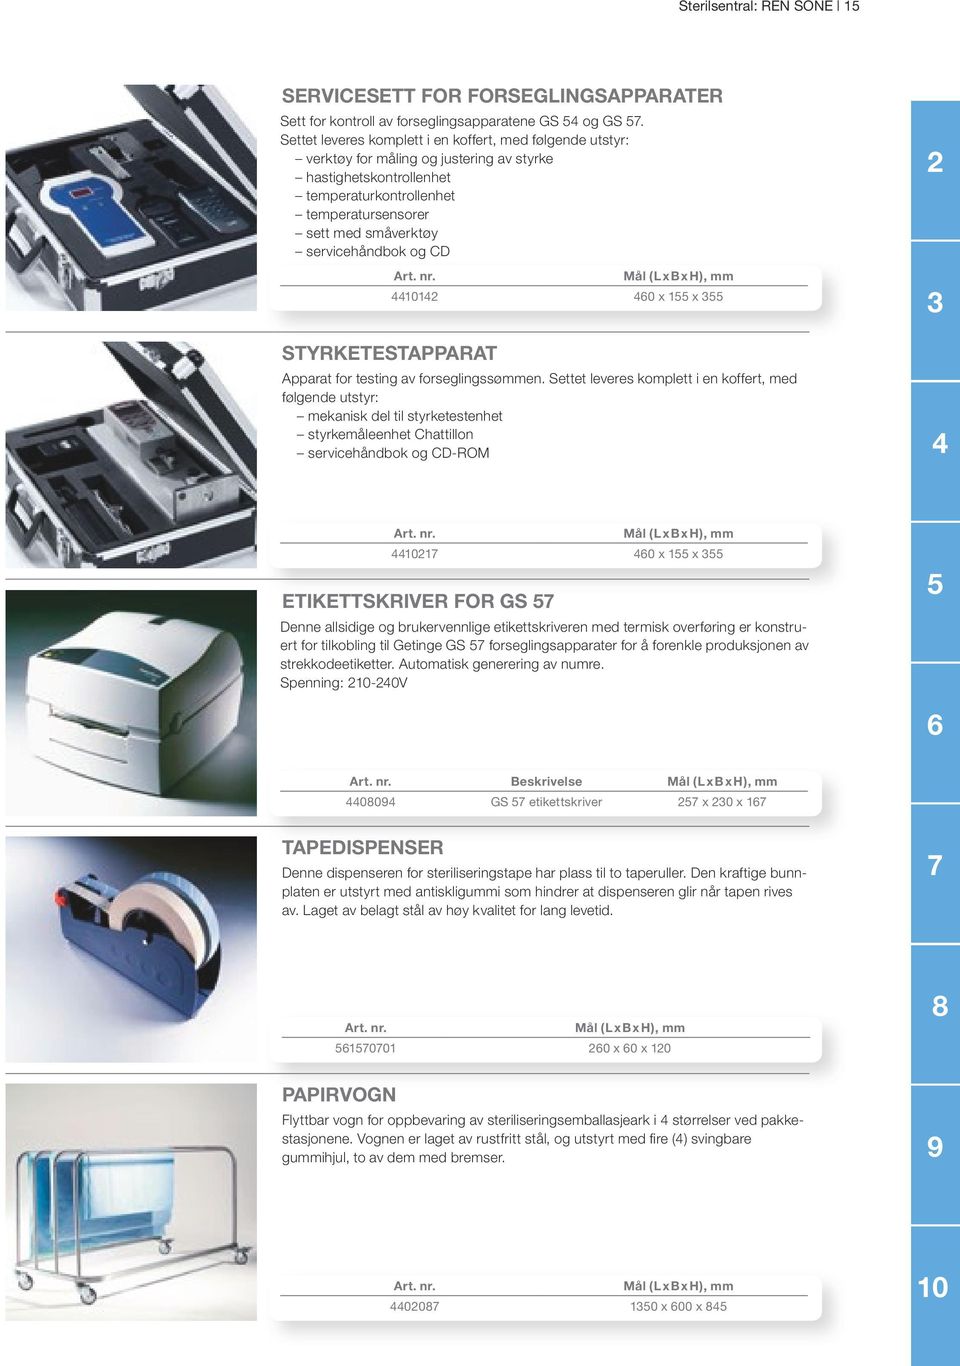 servicehåndbok og CD Mål (L x B x H), mm 1012 60 x 1 x 3 STYRKETESTAPPARAT Apparat for testing av forseglingssømmen.